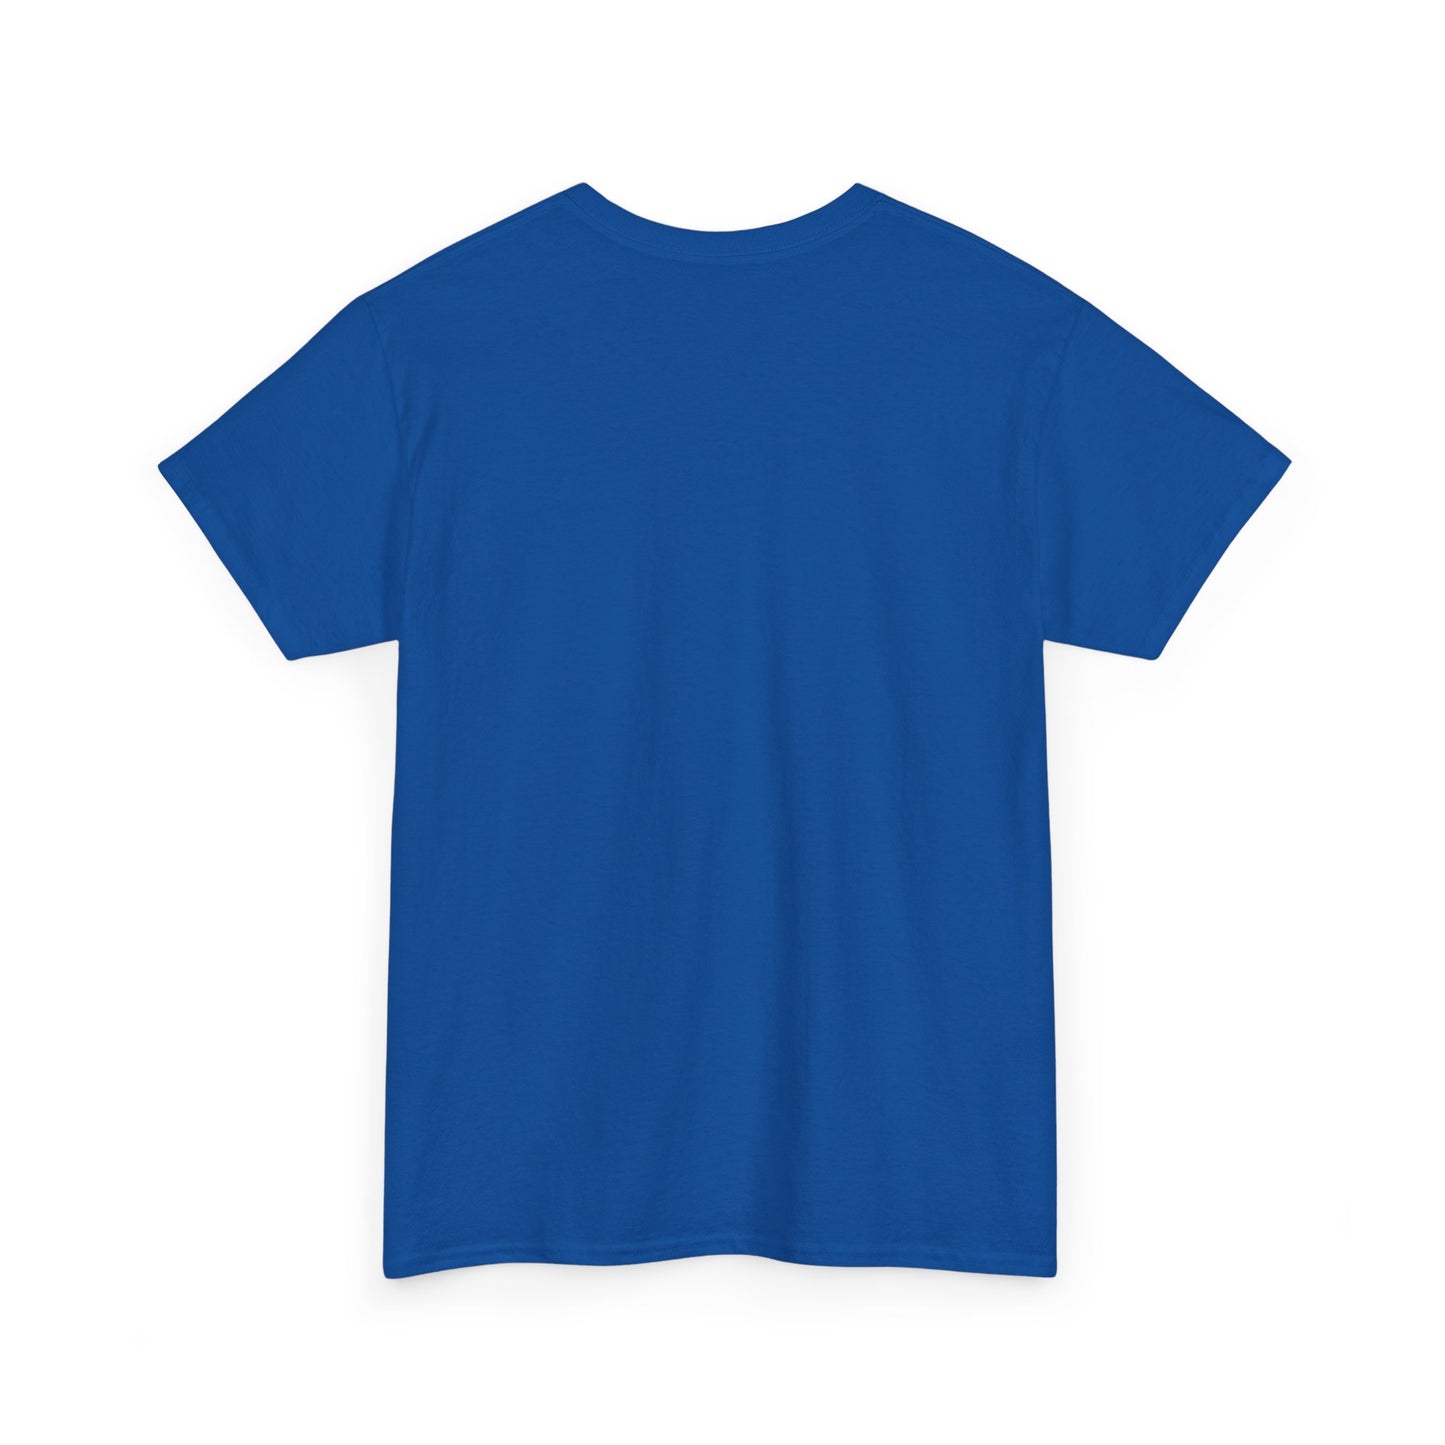 Surf Break T-Shirt,  Surfing T-Shirt, Beach Tee 100% Cotton, 3 Colours, AUS - USA warehouse, free post.